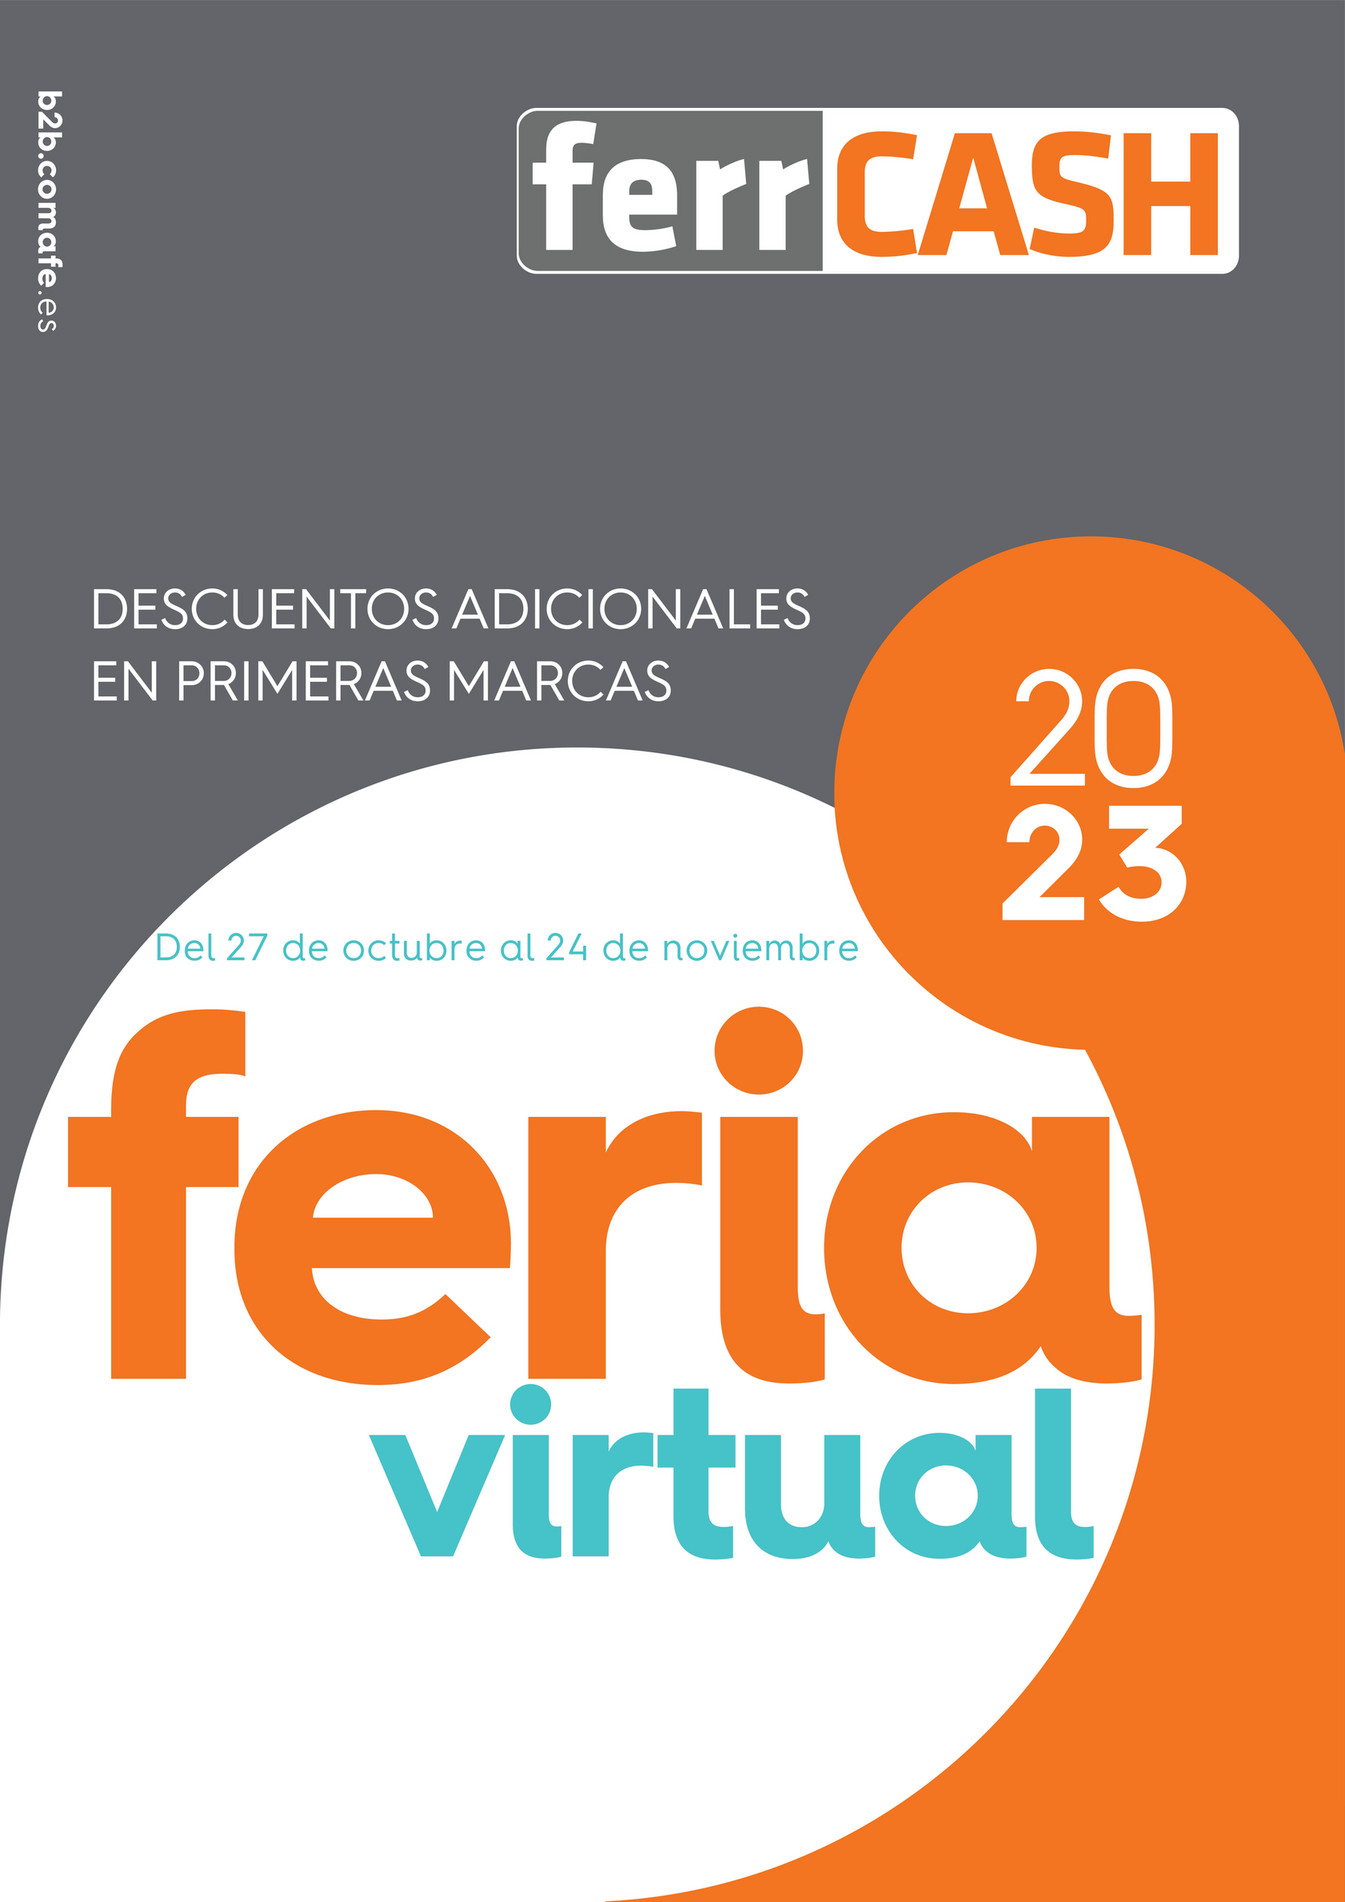 Ferrokey Feria Virtual Ferrcash Octubre 2023 Página 1 Created